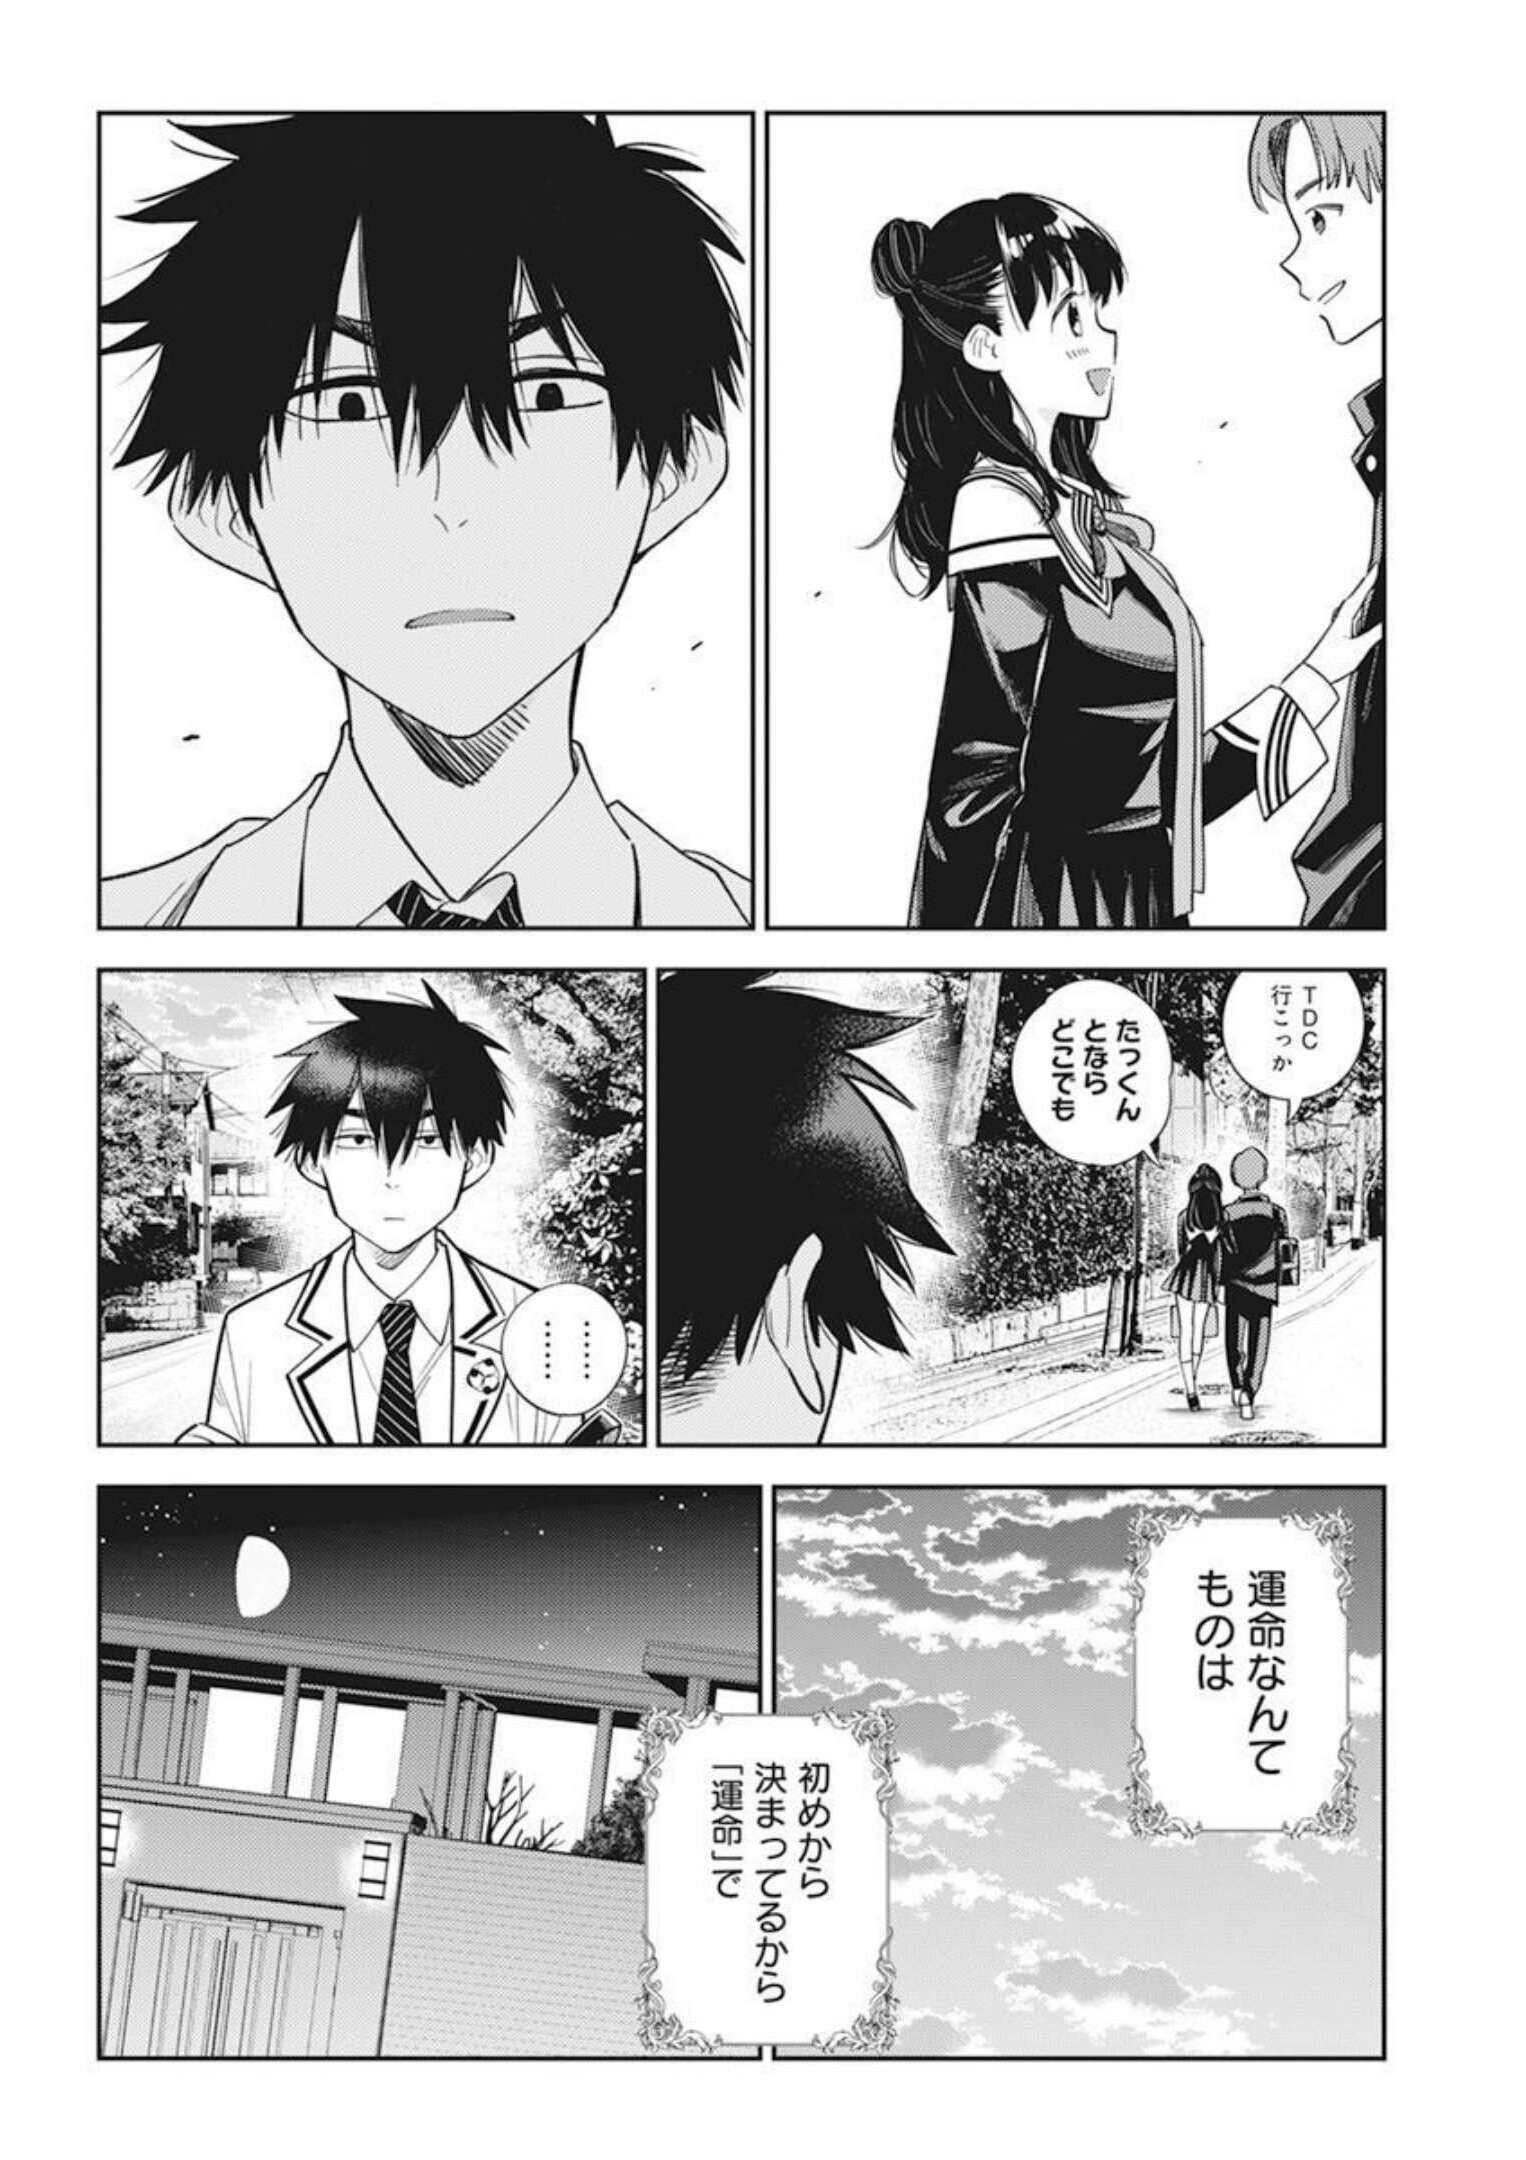 Shiunji-ke no Kodomotachi (Children of the Shiunji Family) - Chapter 01 - Page 41